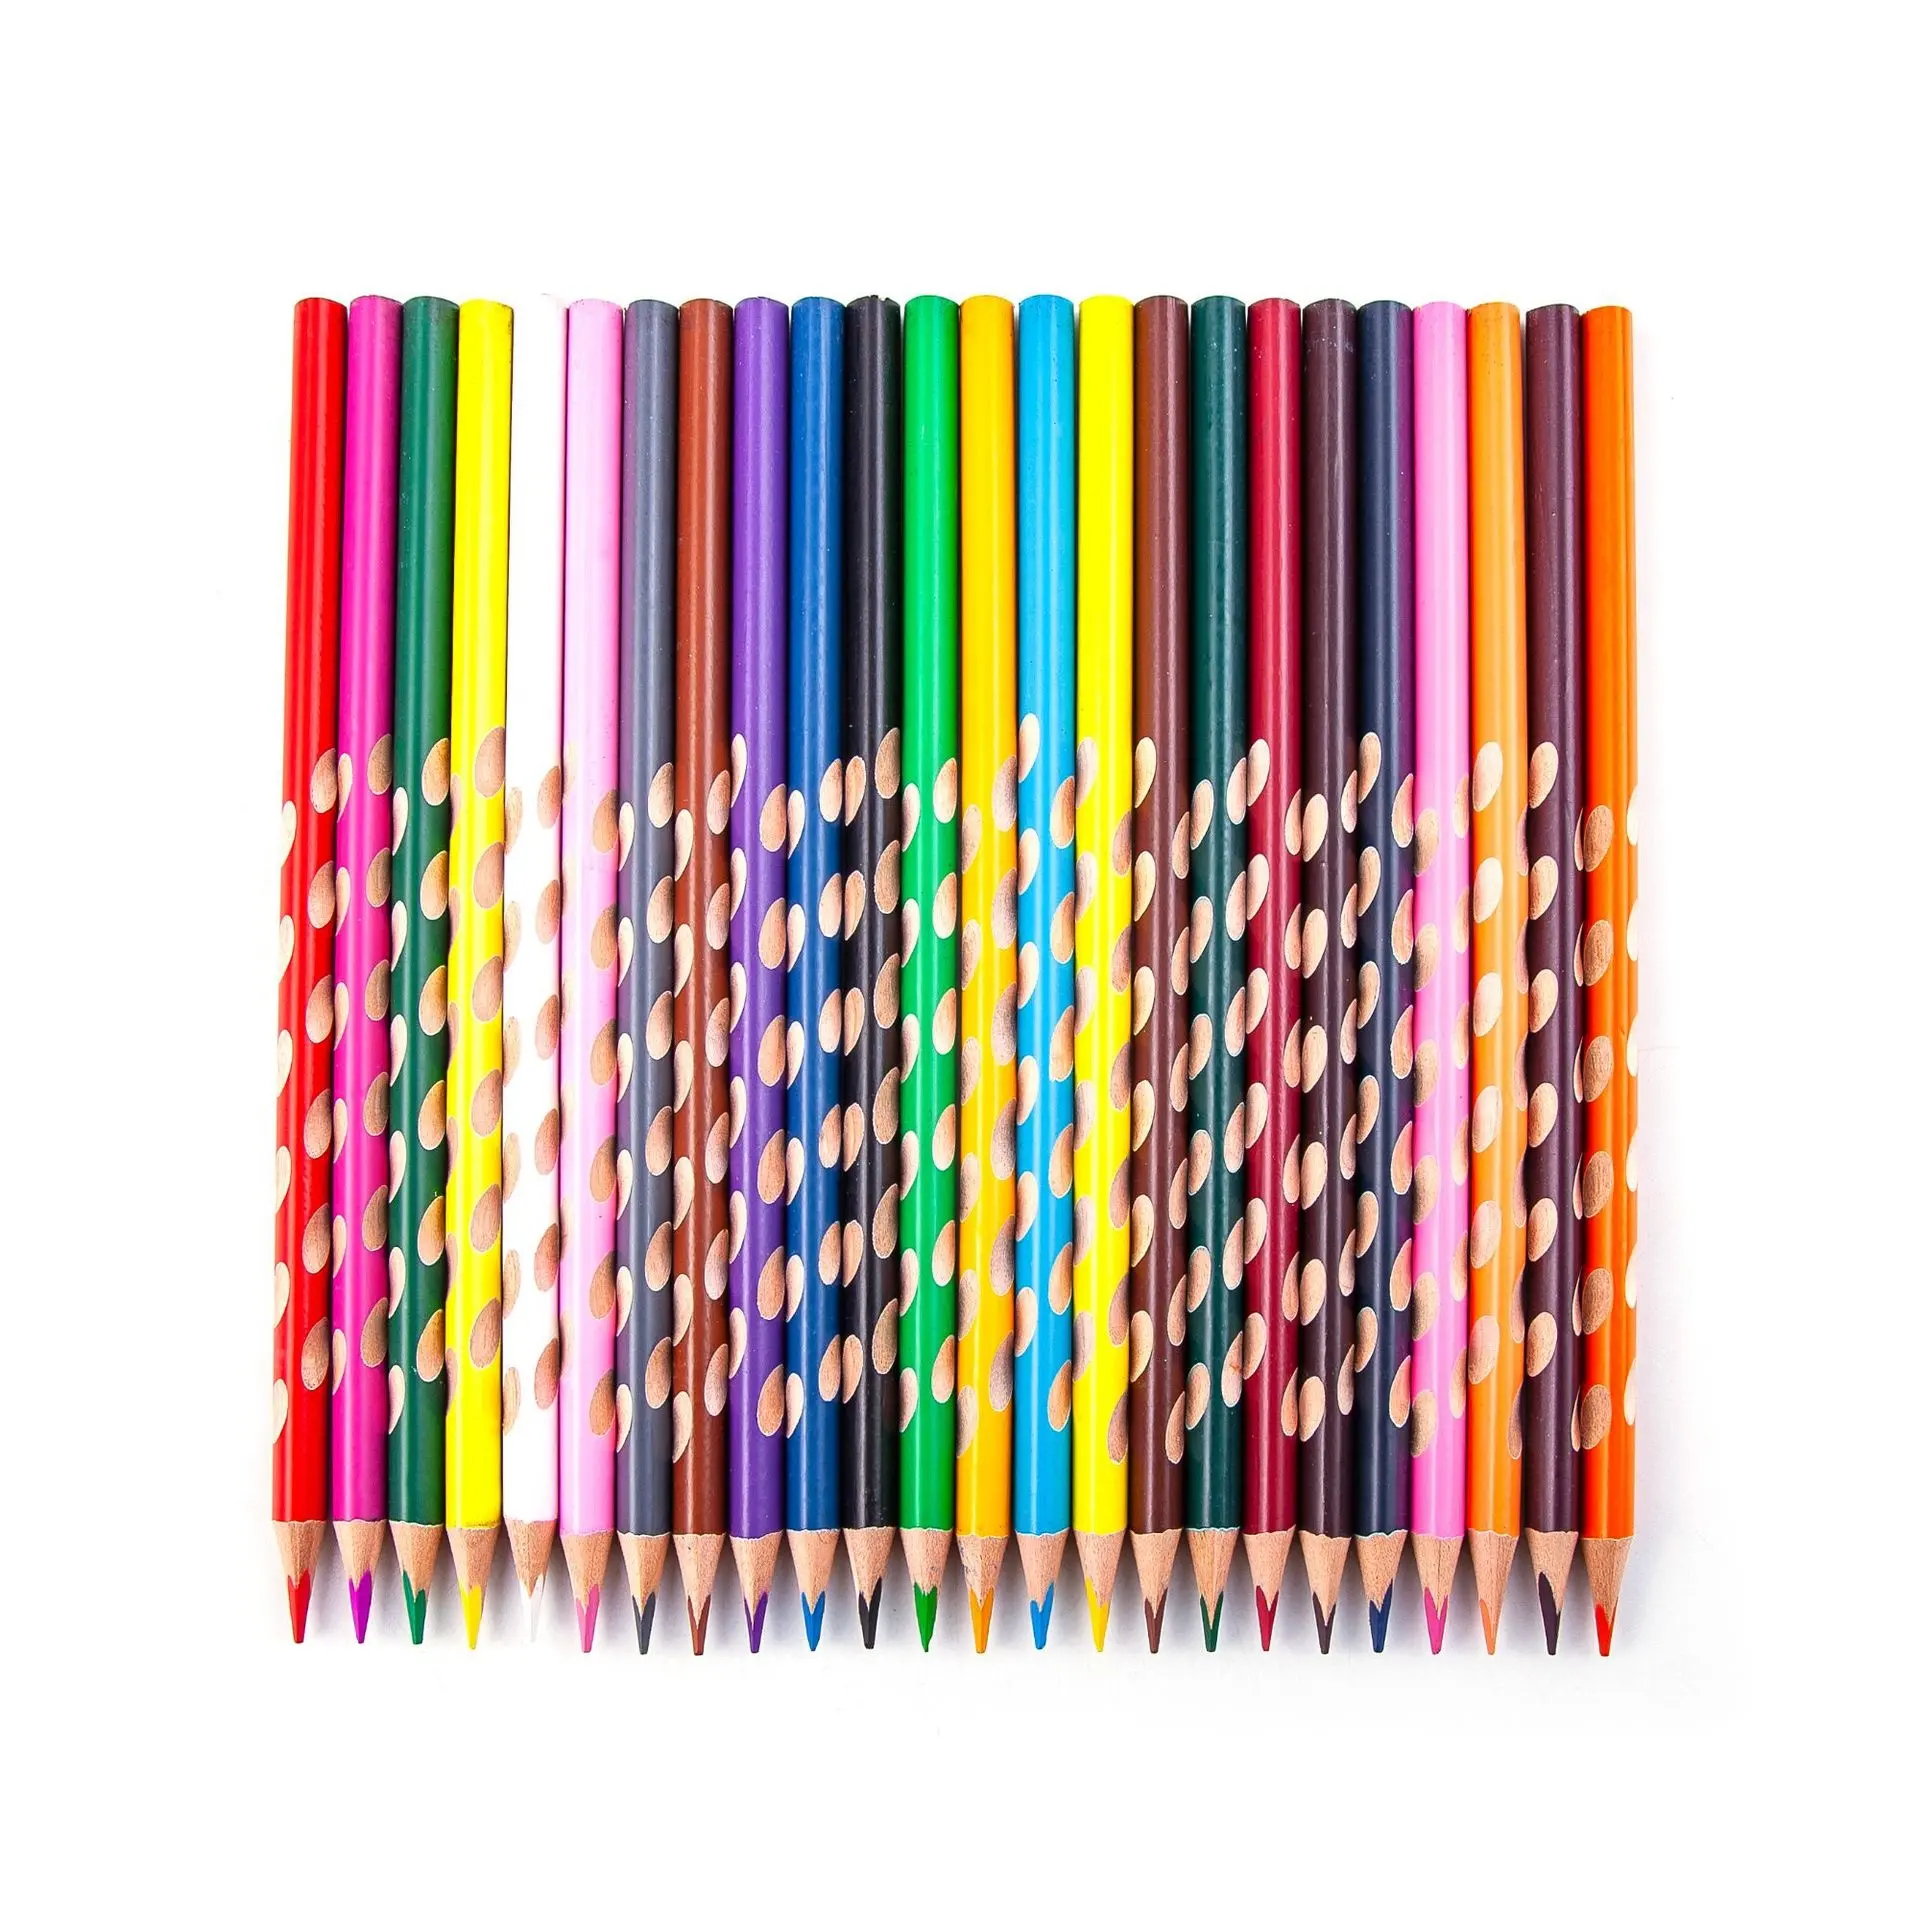 Set pensil batang segitiga warna pelangi, menggambar Doodling, kayu seni Multi pensil warna dapat disesuaikan